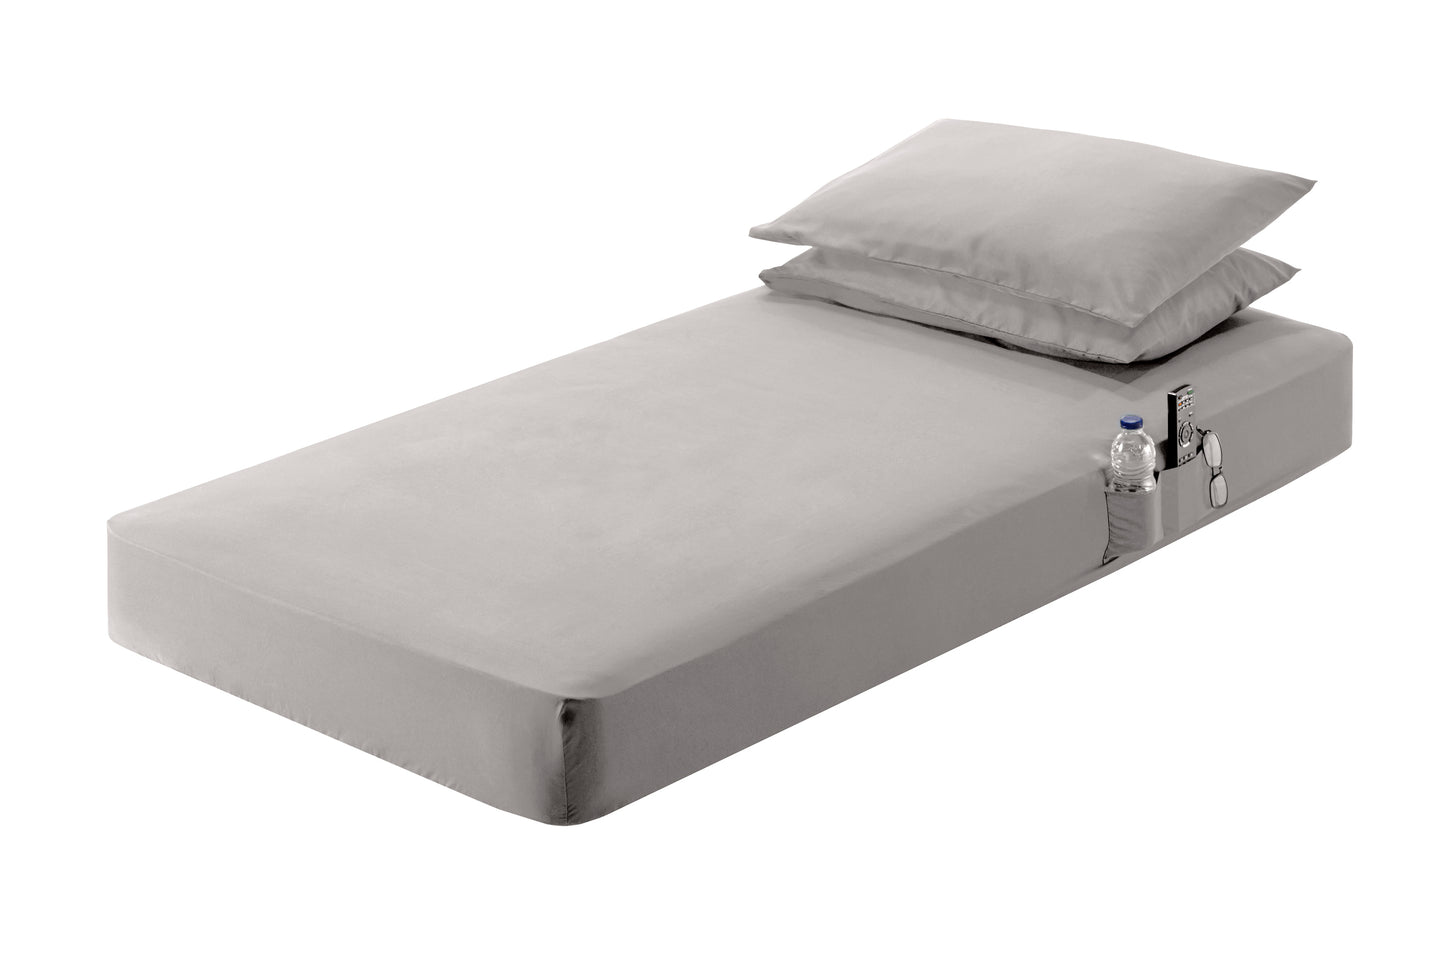 Blue Bed Sheets, Fits Semi-Truck/RV/Camper Mattresses – Assorted Sizes